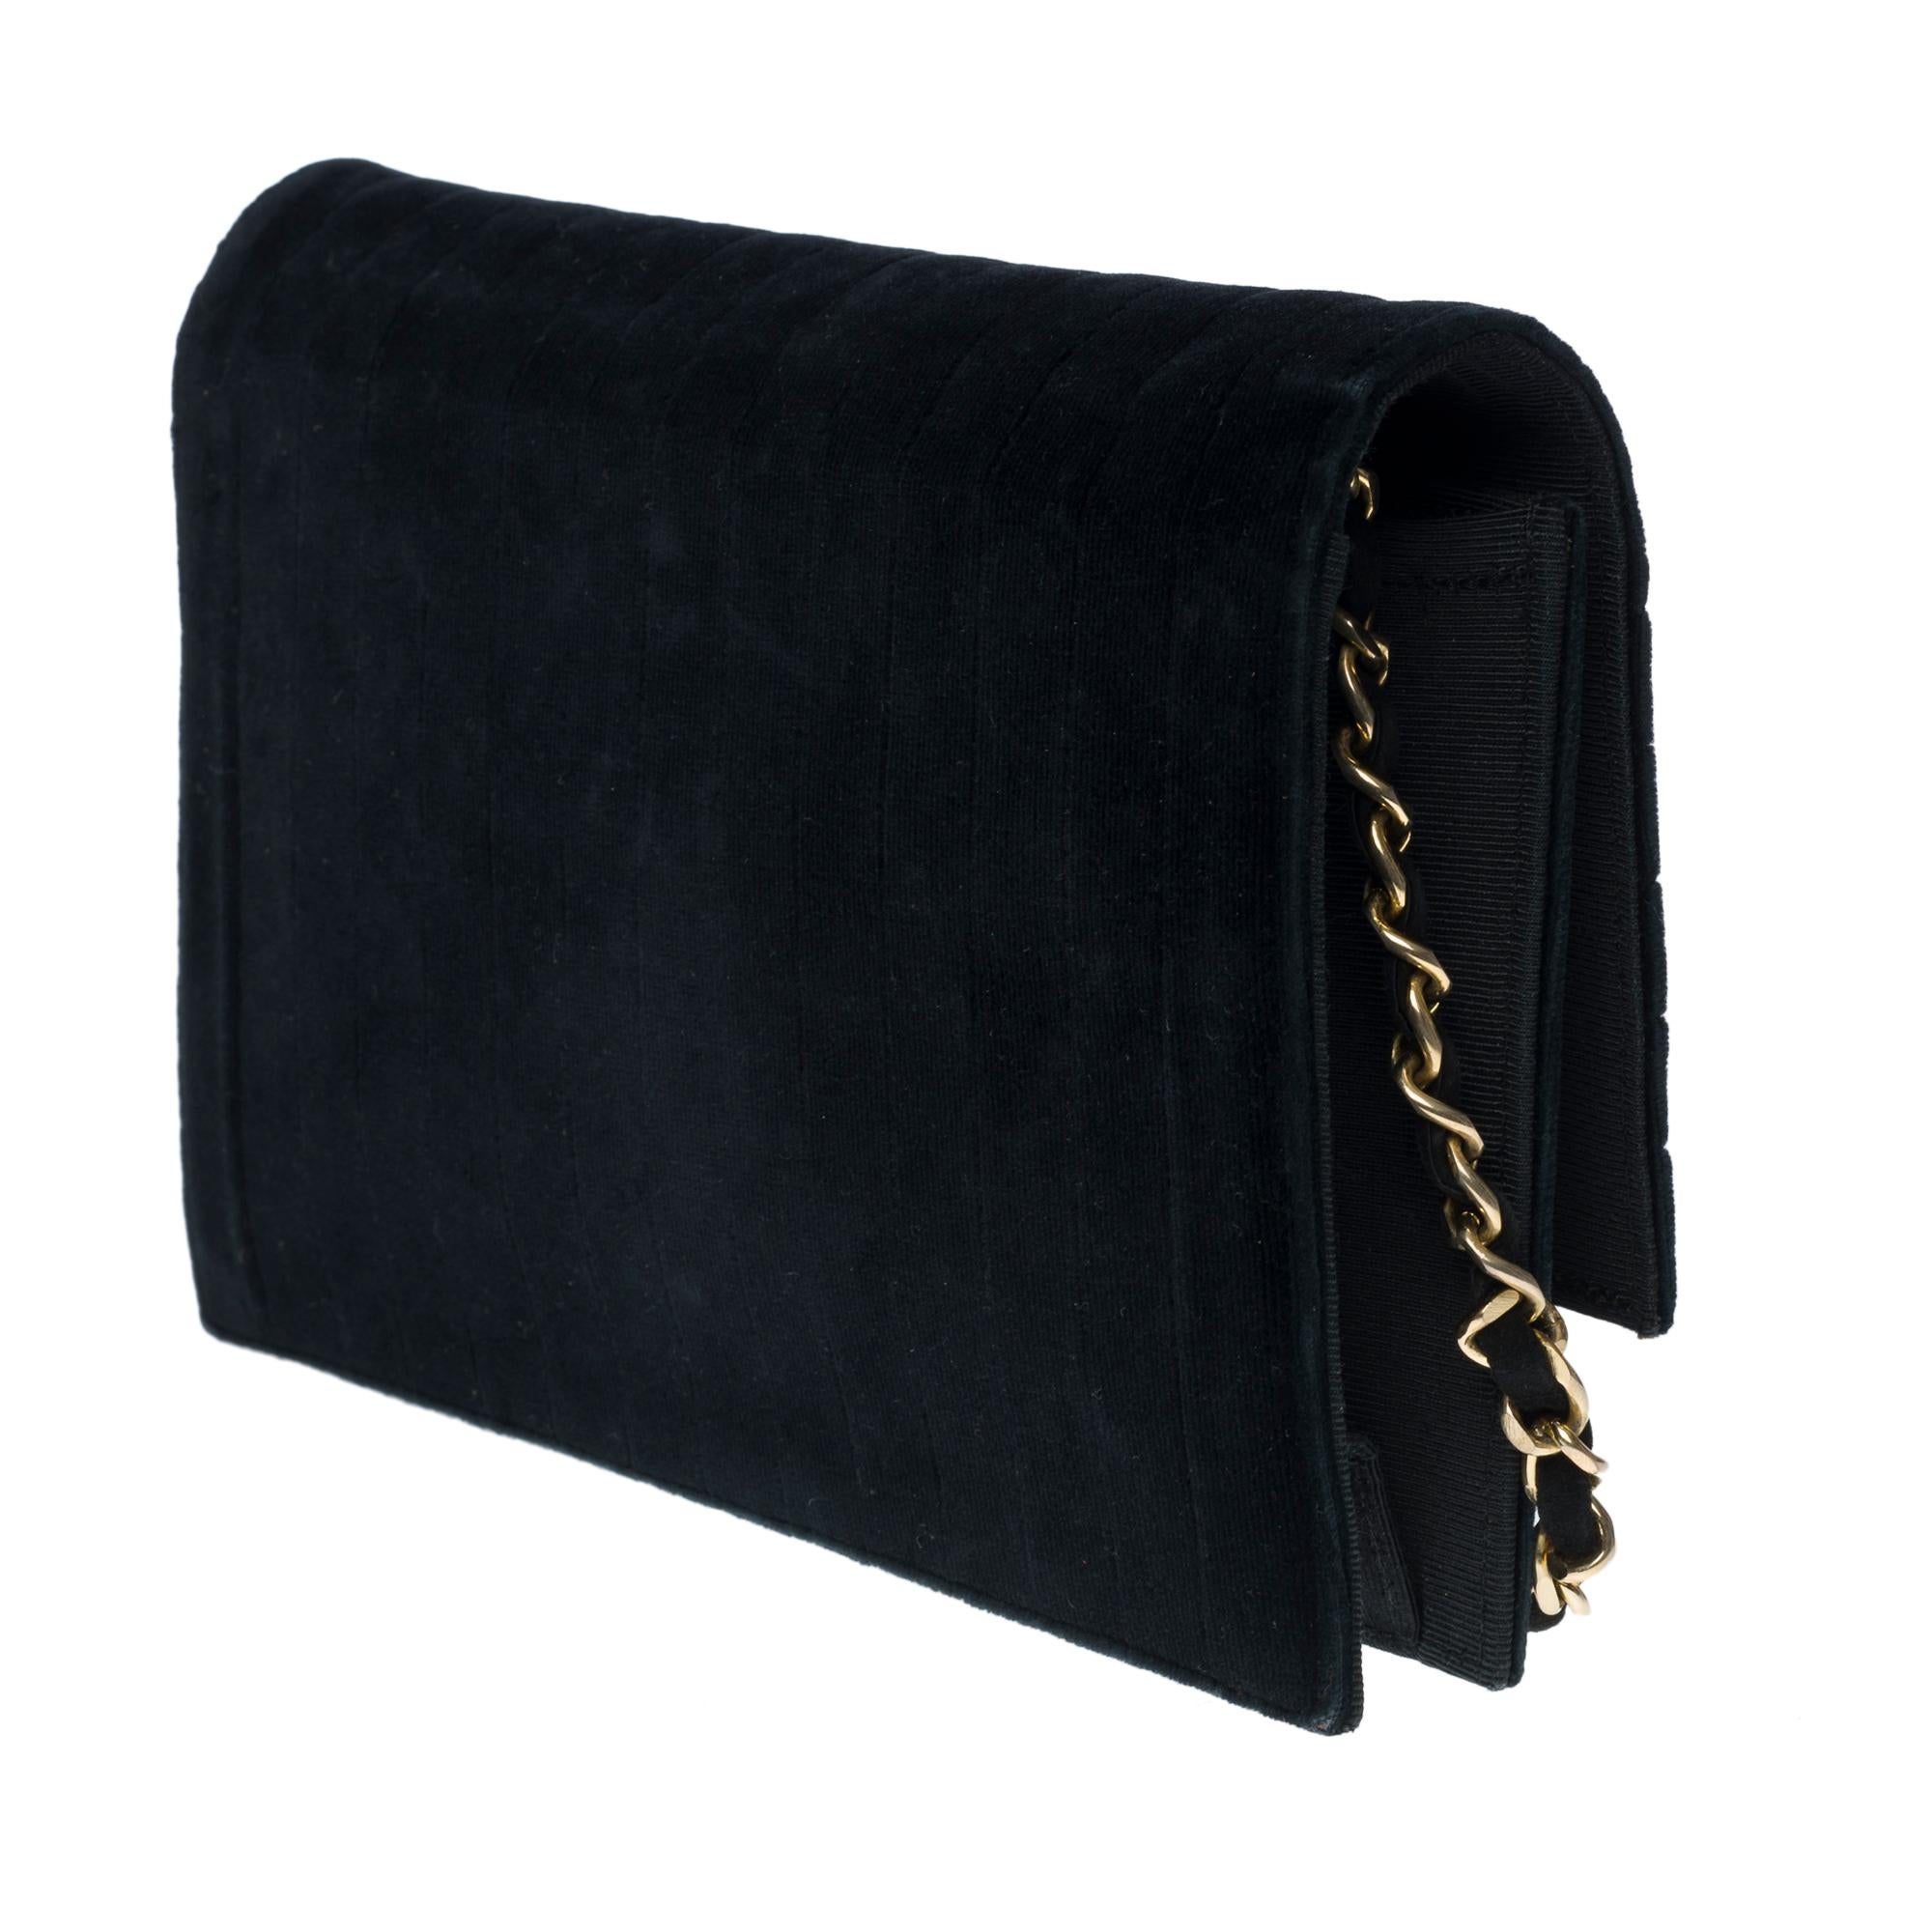 Rare Chanel Classic shoulder flap bag in black velvet, GHW 1